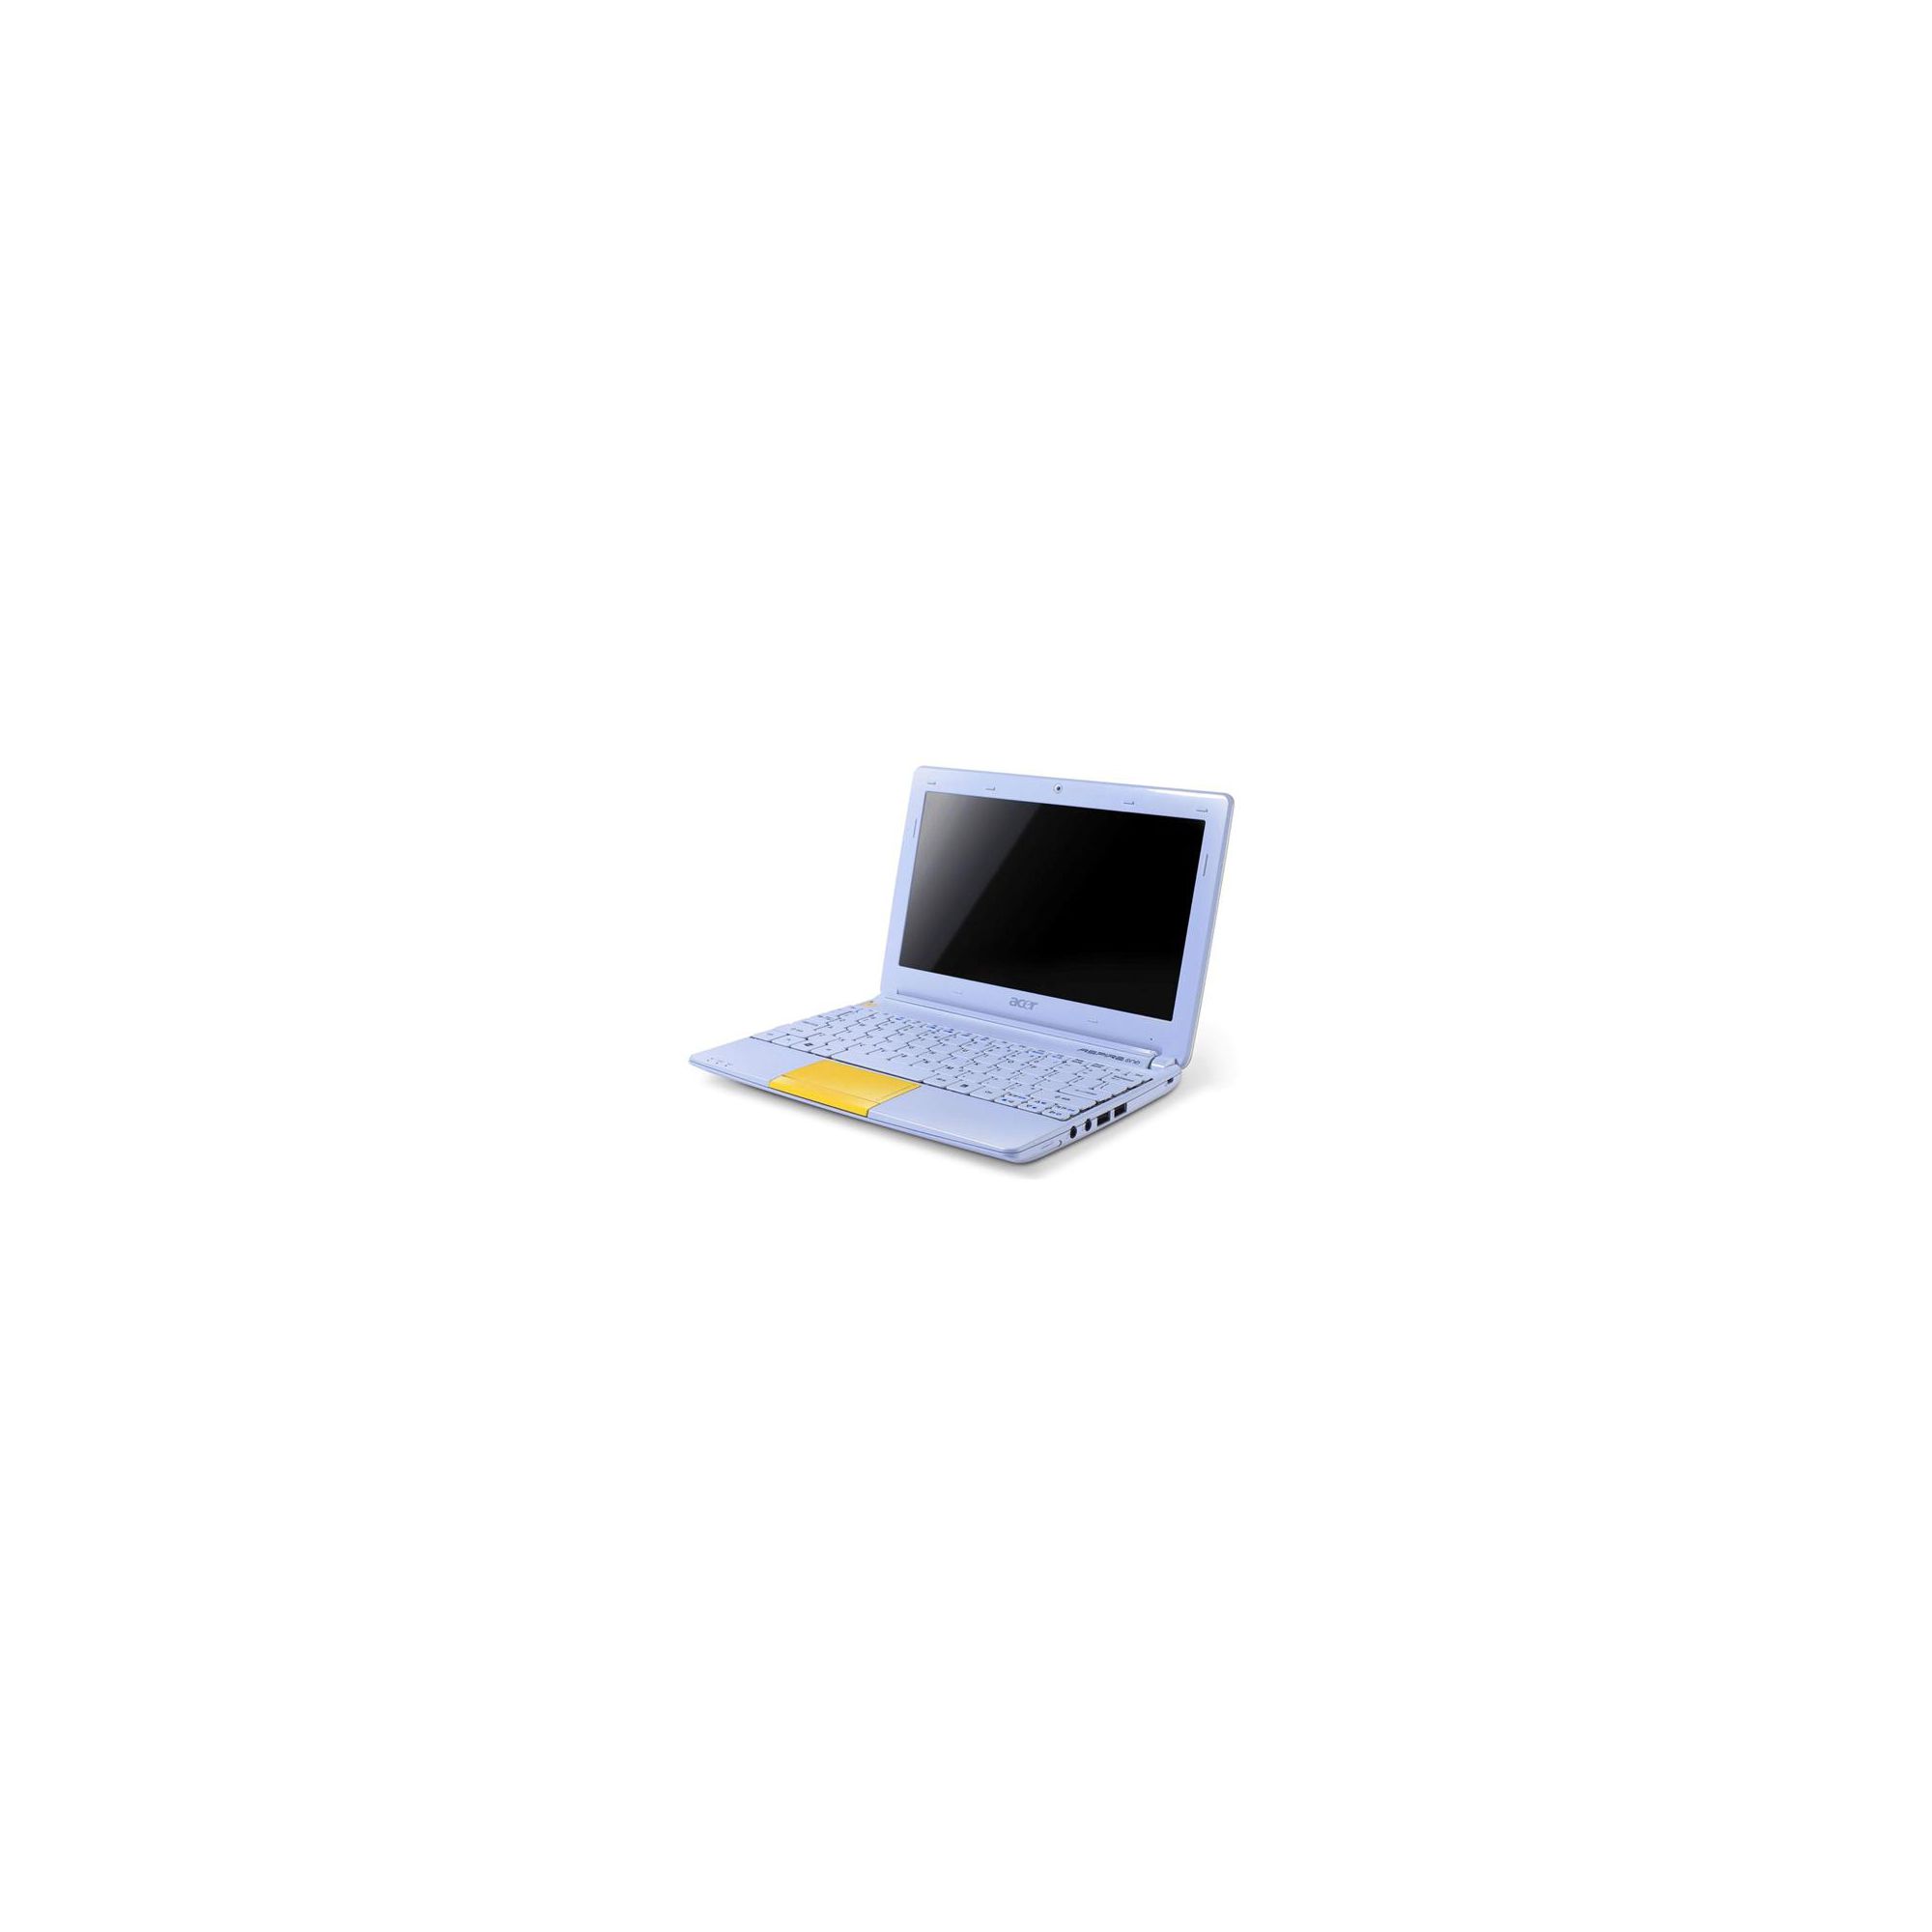 Acer Aspire Happy 2 Netbook (Intel Atom, 1GB, 250GB, 10.1'' Display) Yellow at Tesco Direct